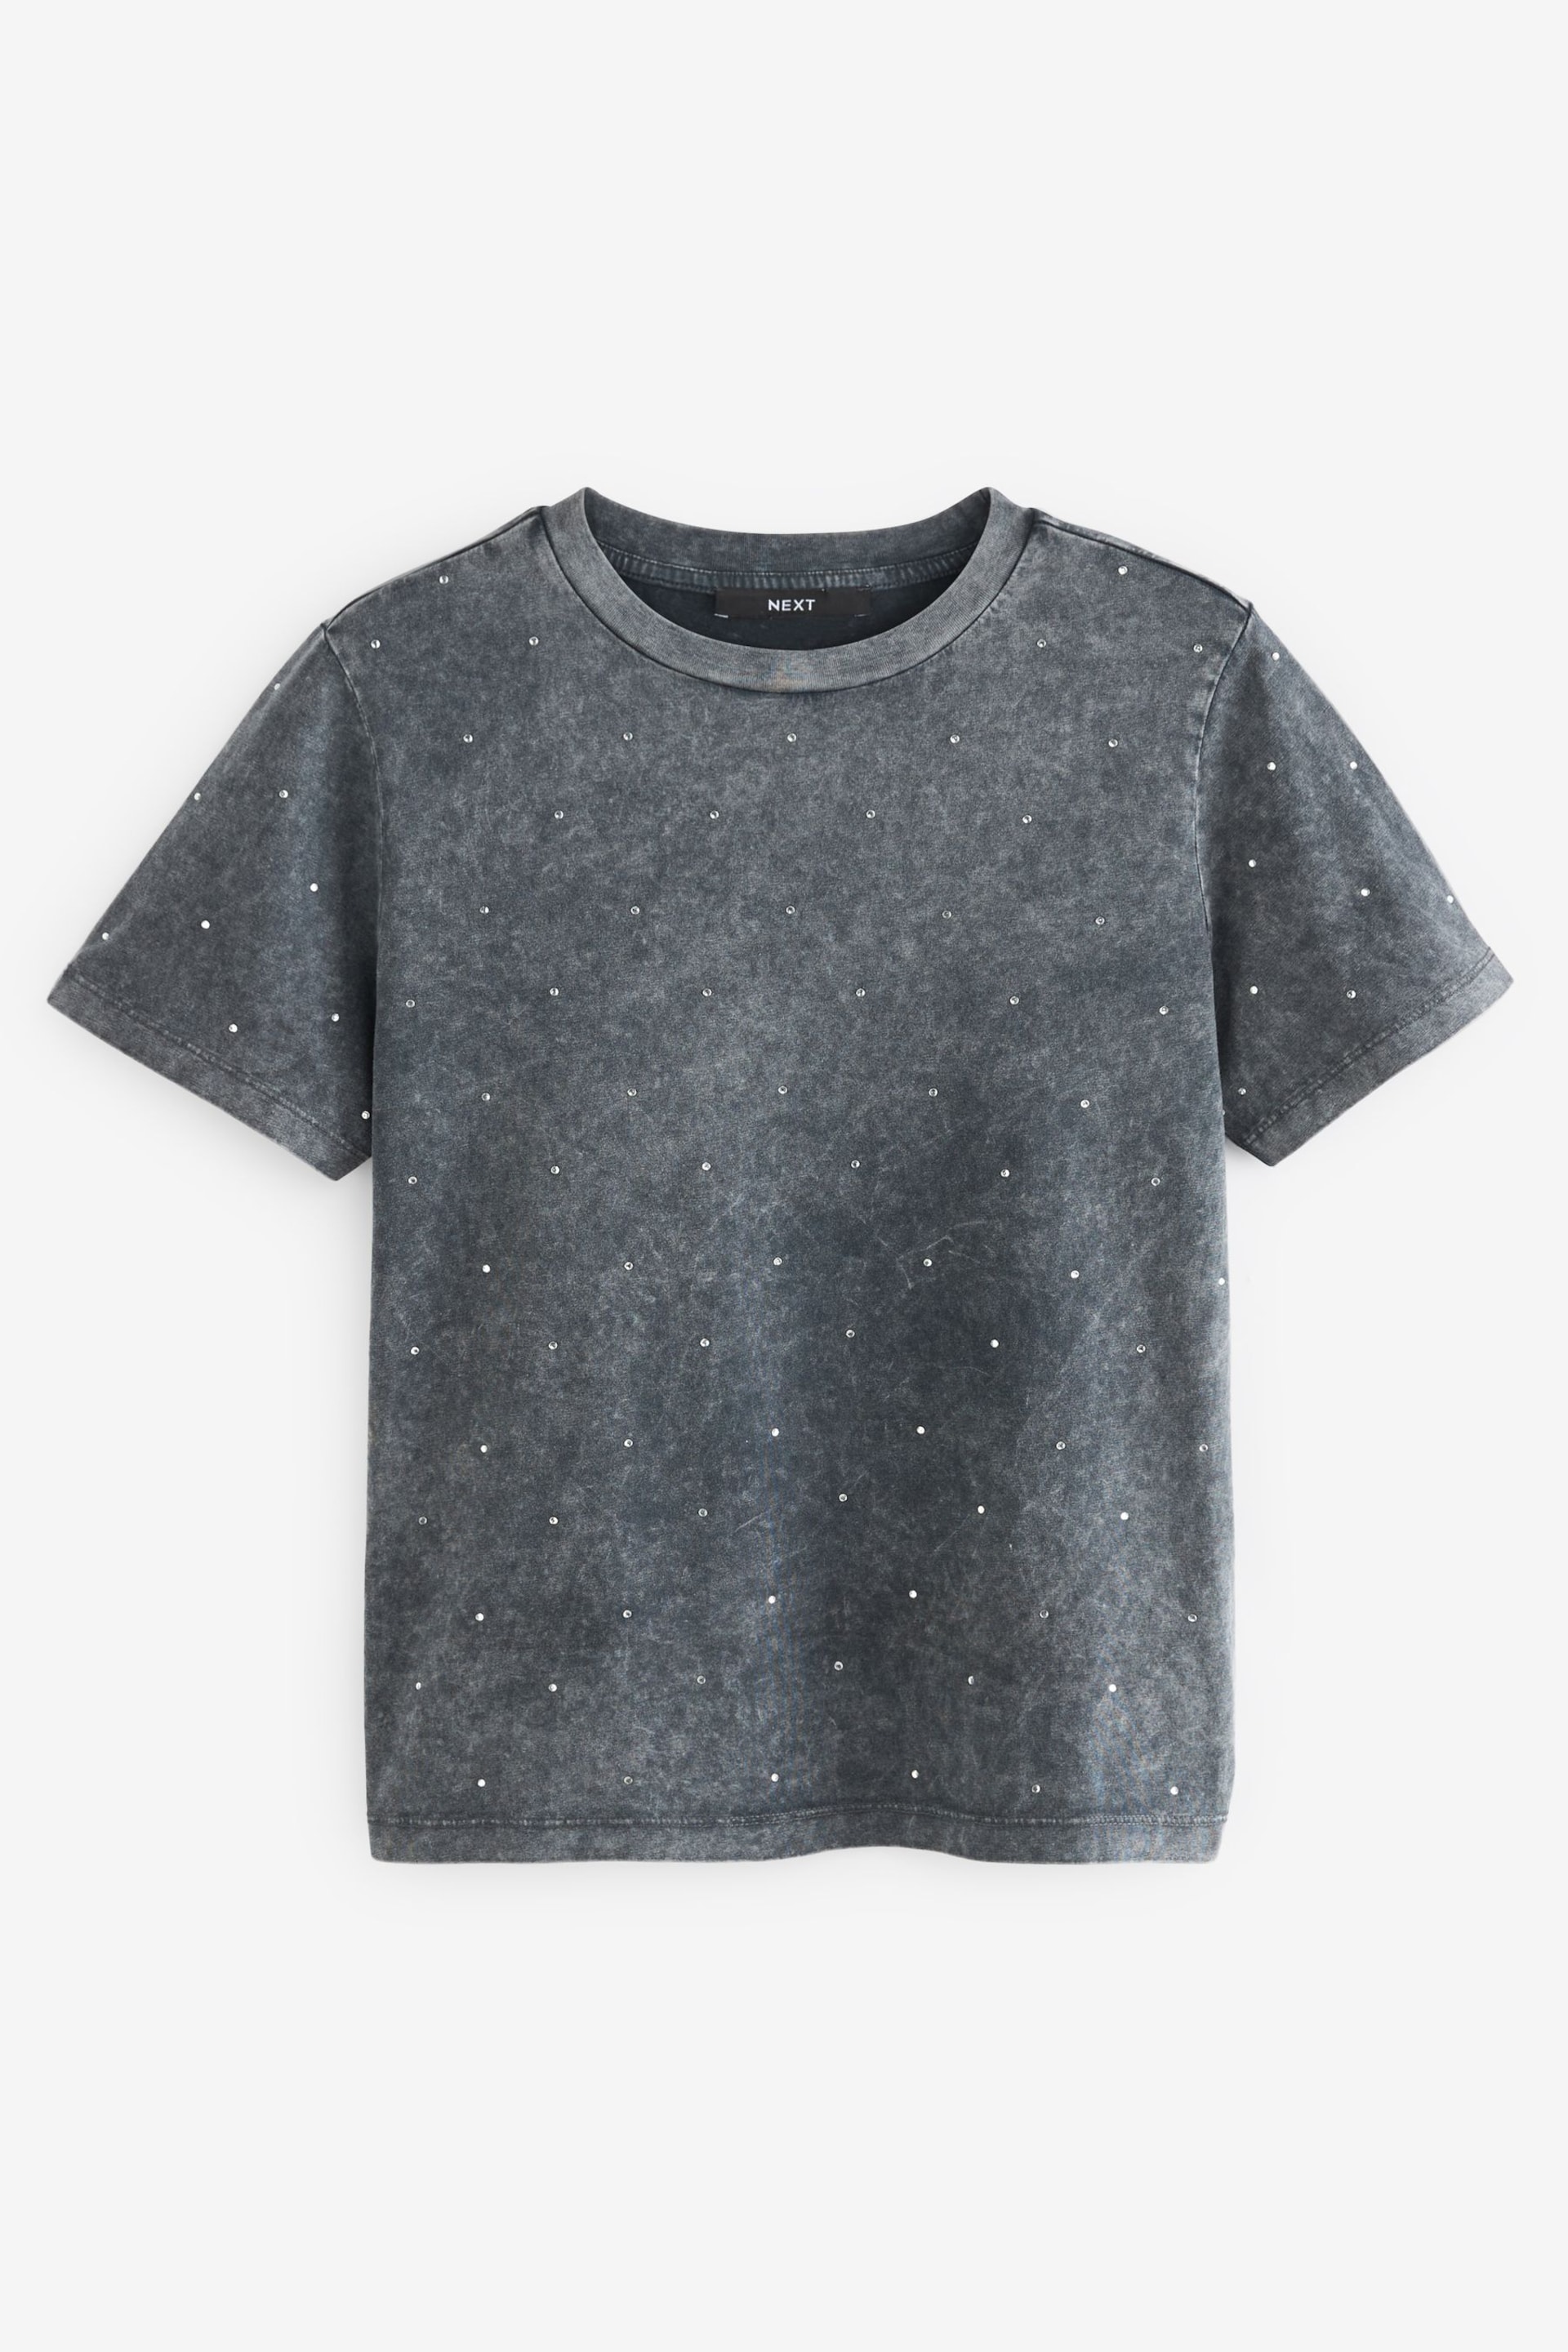 Washed Charcoal Grey Short Sleeve Sparkle Embellished T-Shirt - Image 5 of 6